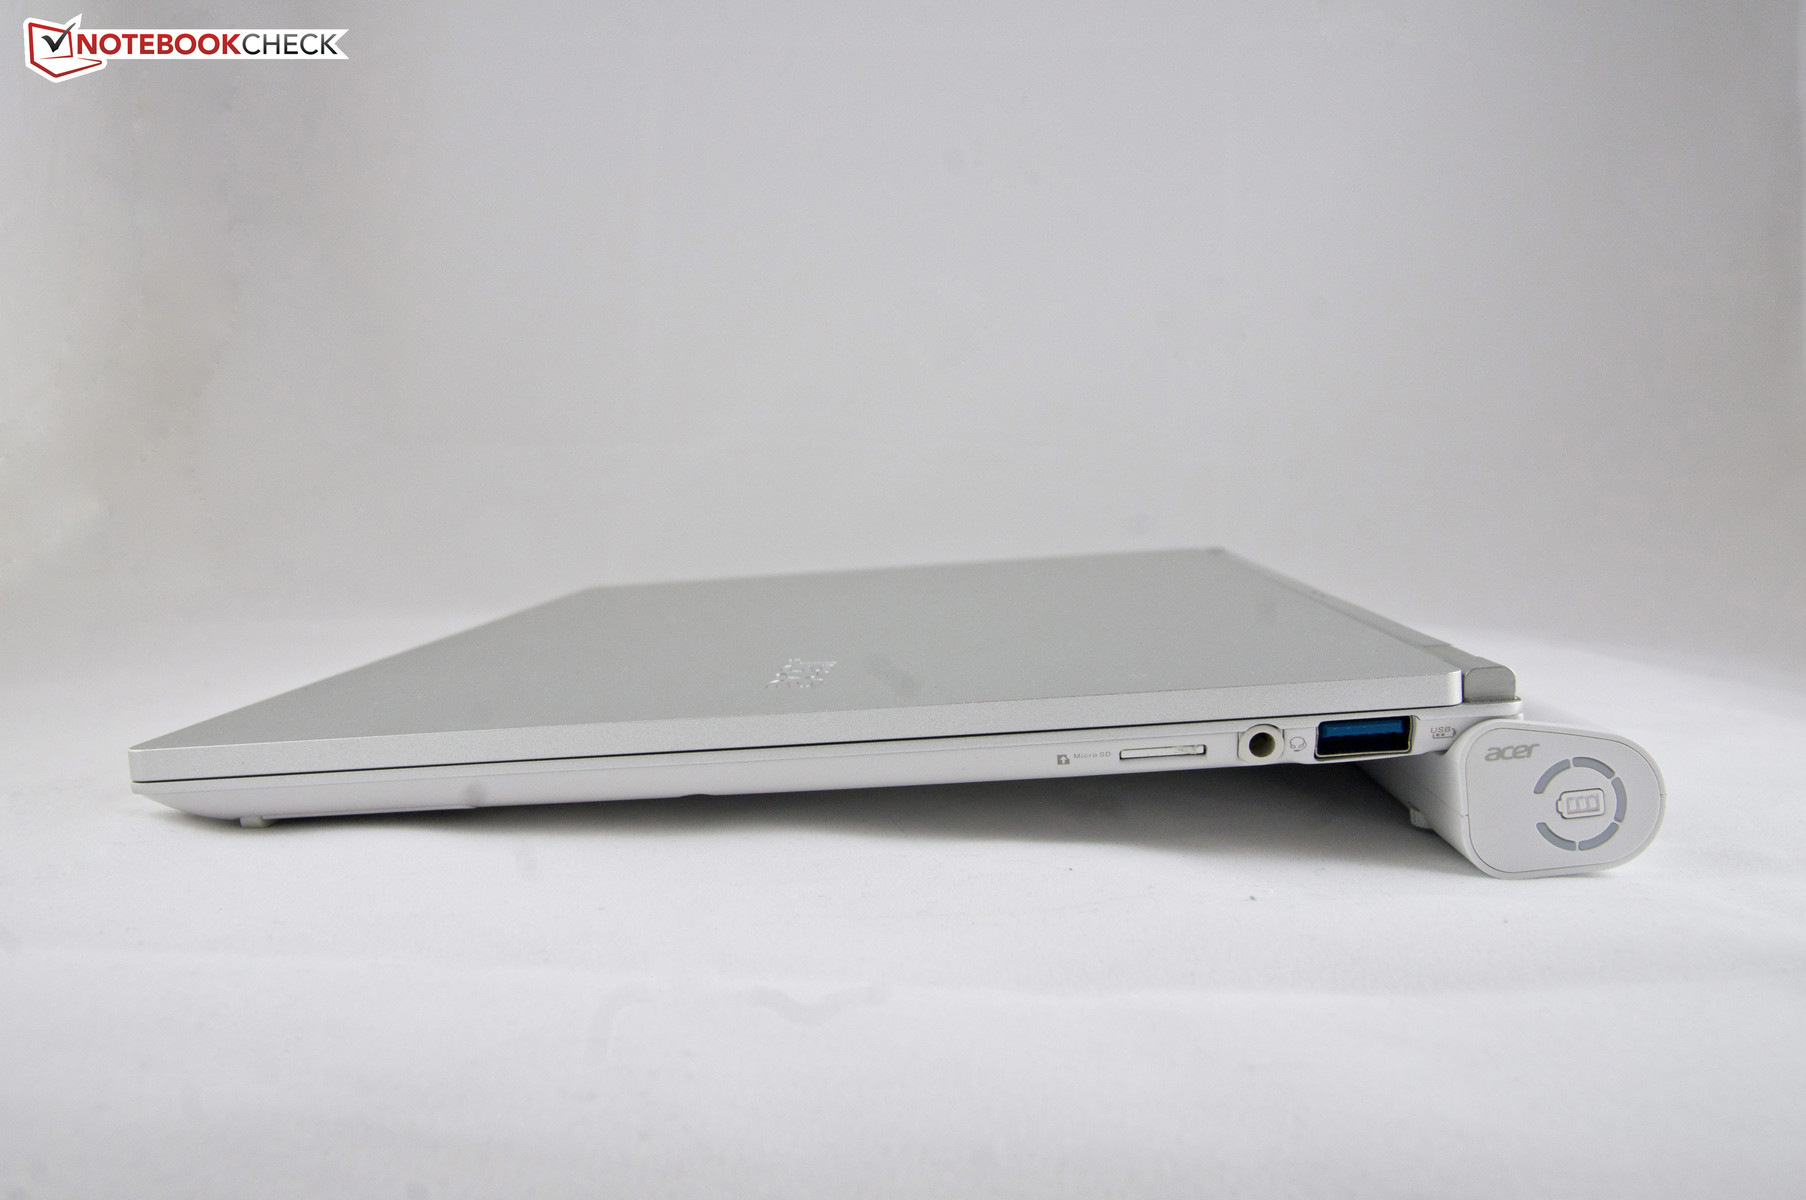 Review Acer Aspire S7-191 Ultrabook - NotebookCheck.net Reviews